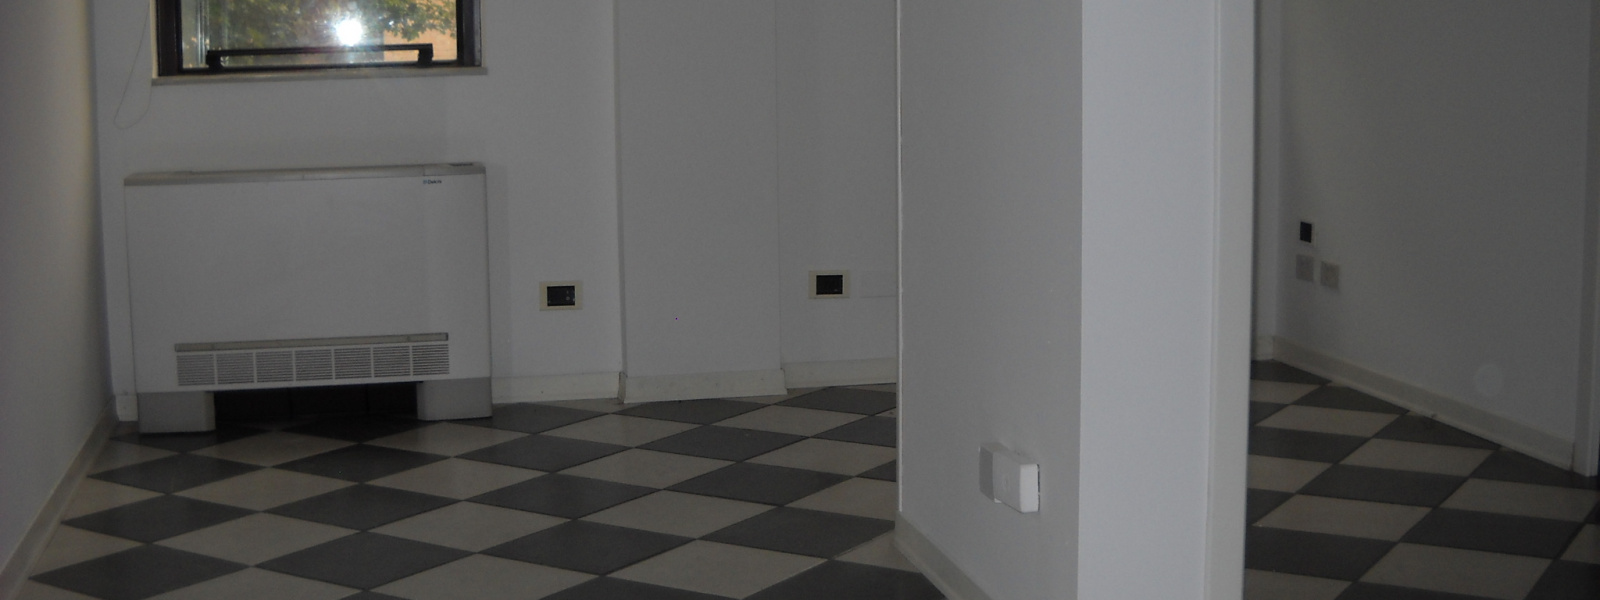 2 BathroomsBathrooms,Ufficio,In Affitto,2,1629